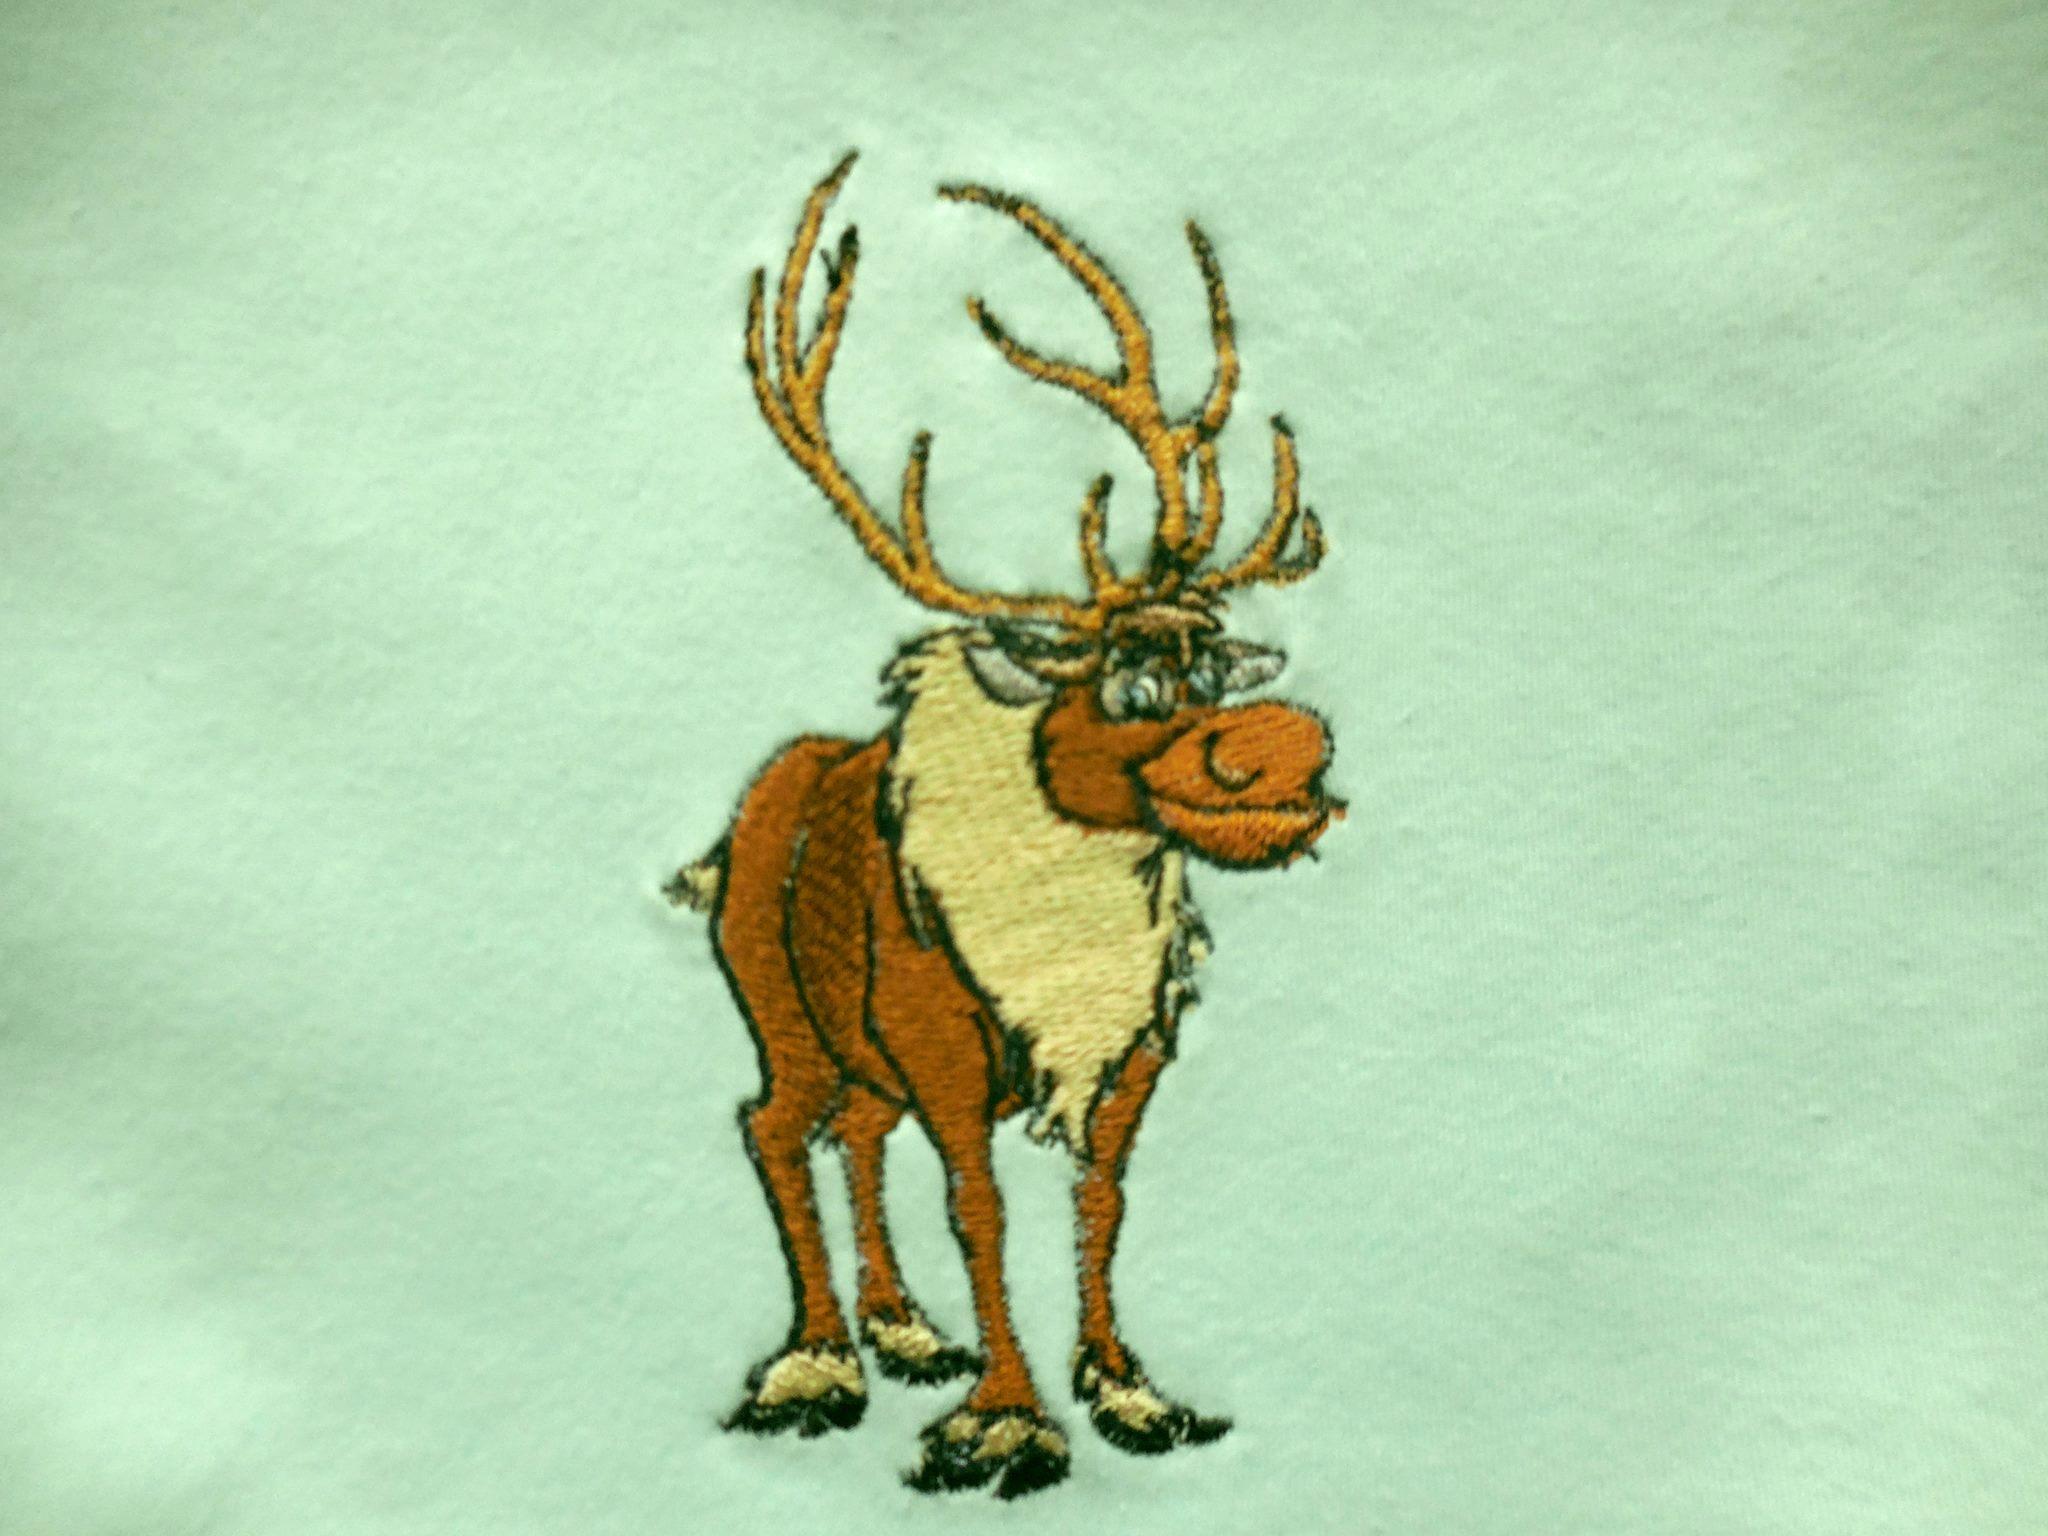 Sven the reindeer from Disney's Frozen embroidery design